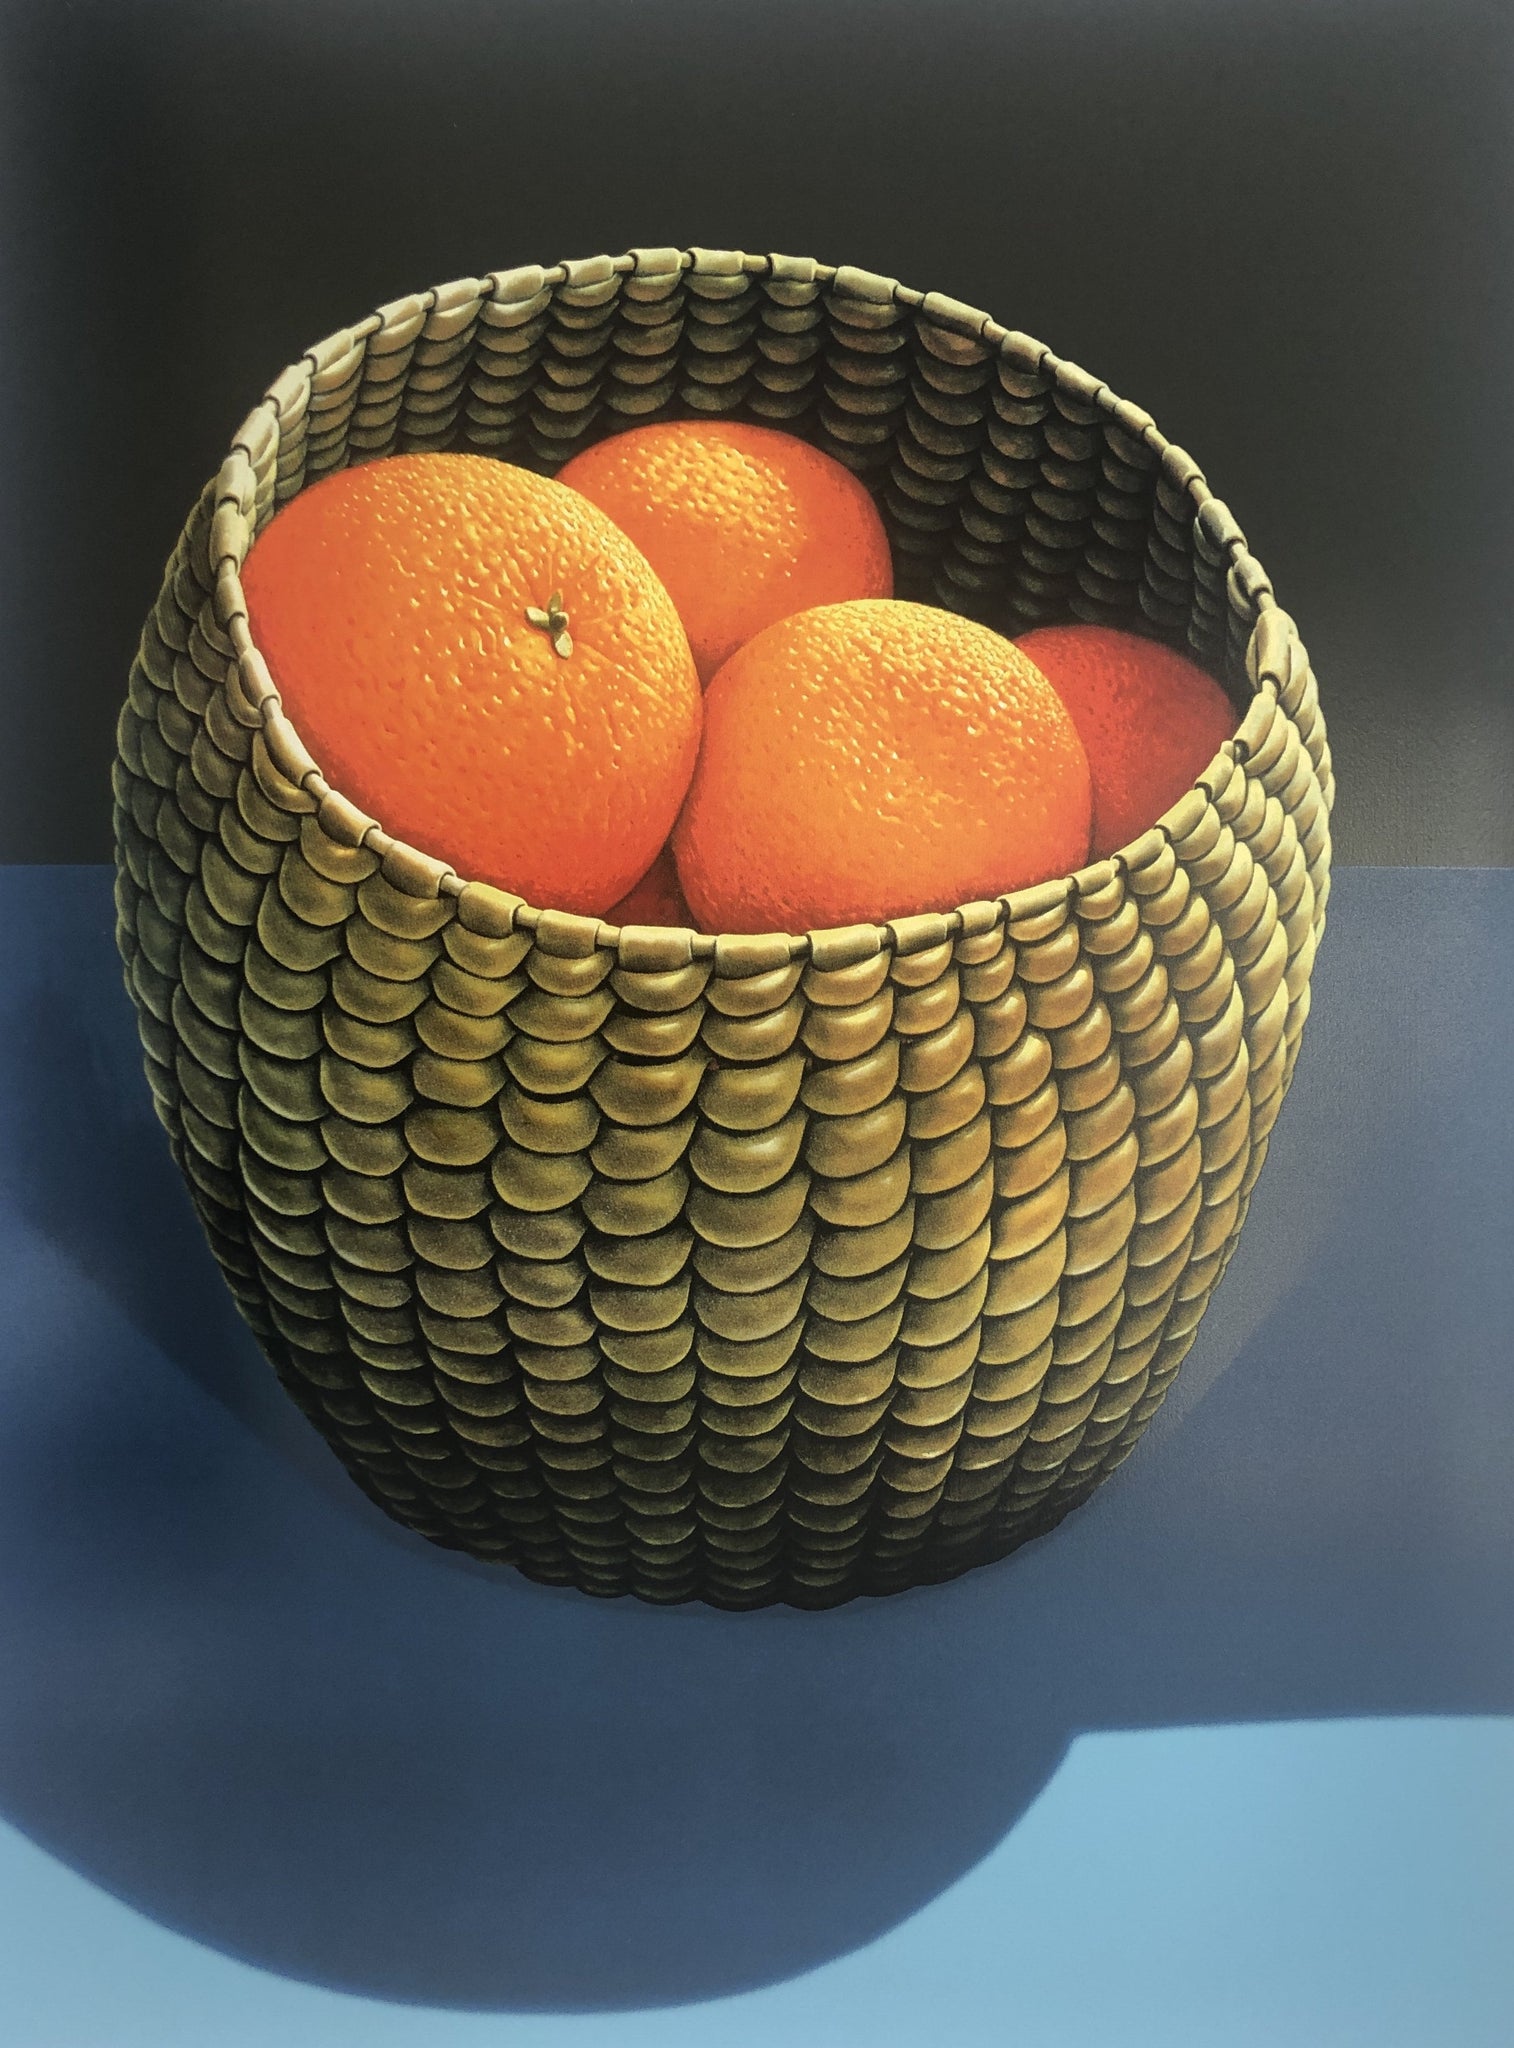 Oranges in a Seagrass Basket